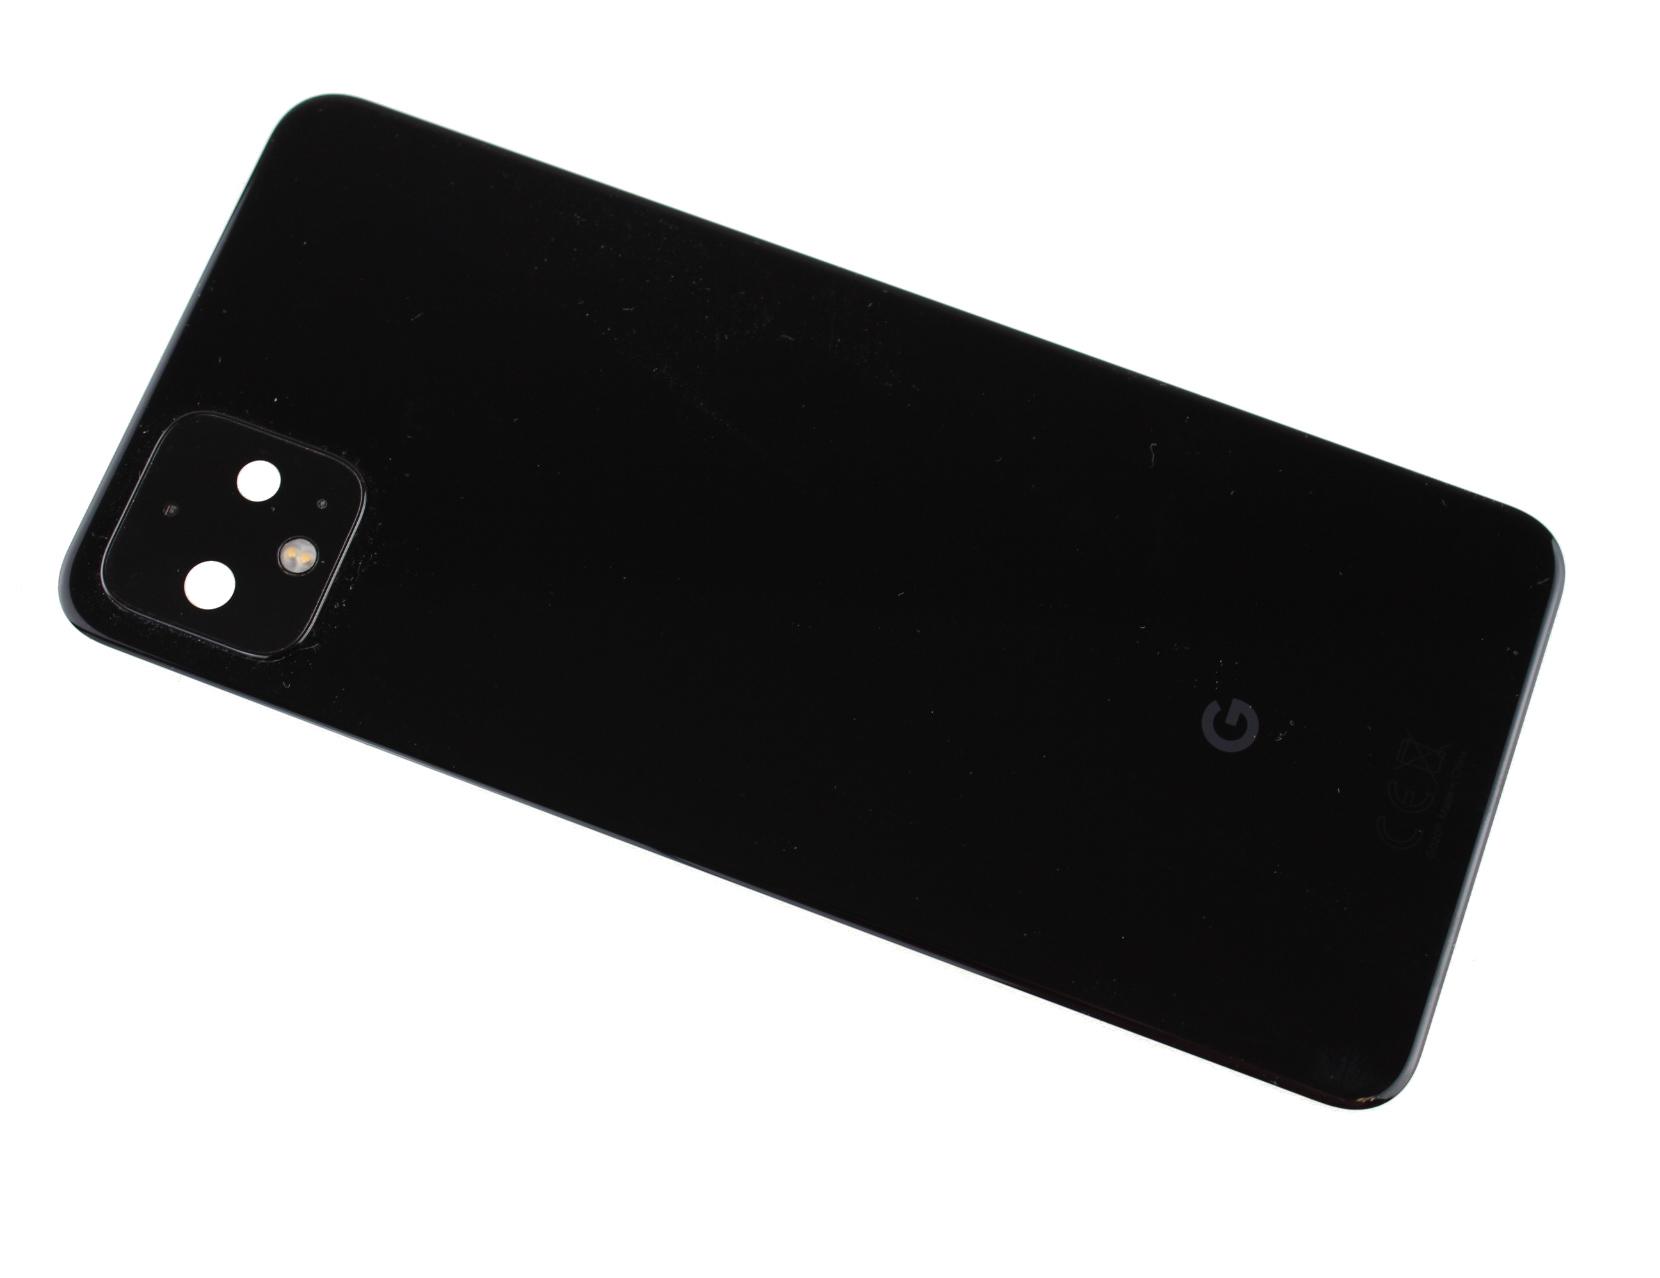 Originál kryt baterie Google Pixel 4 XL G020P černý - demontovaný díl